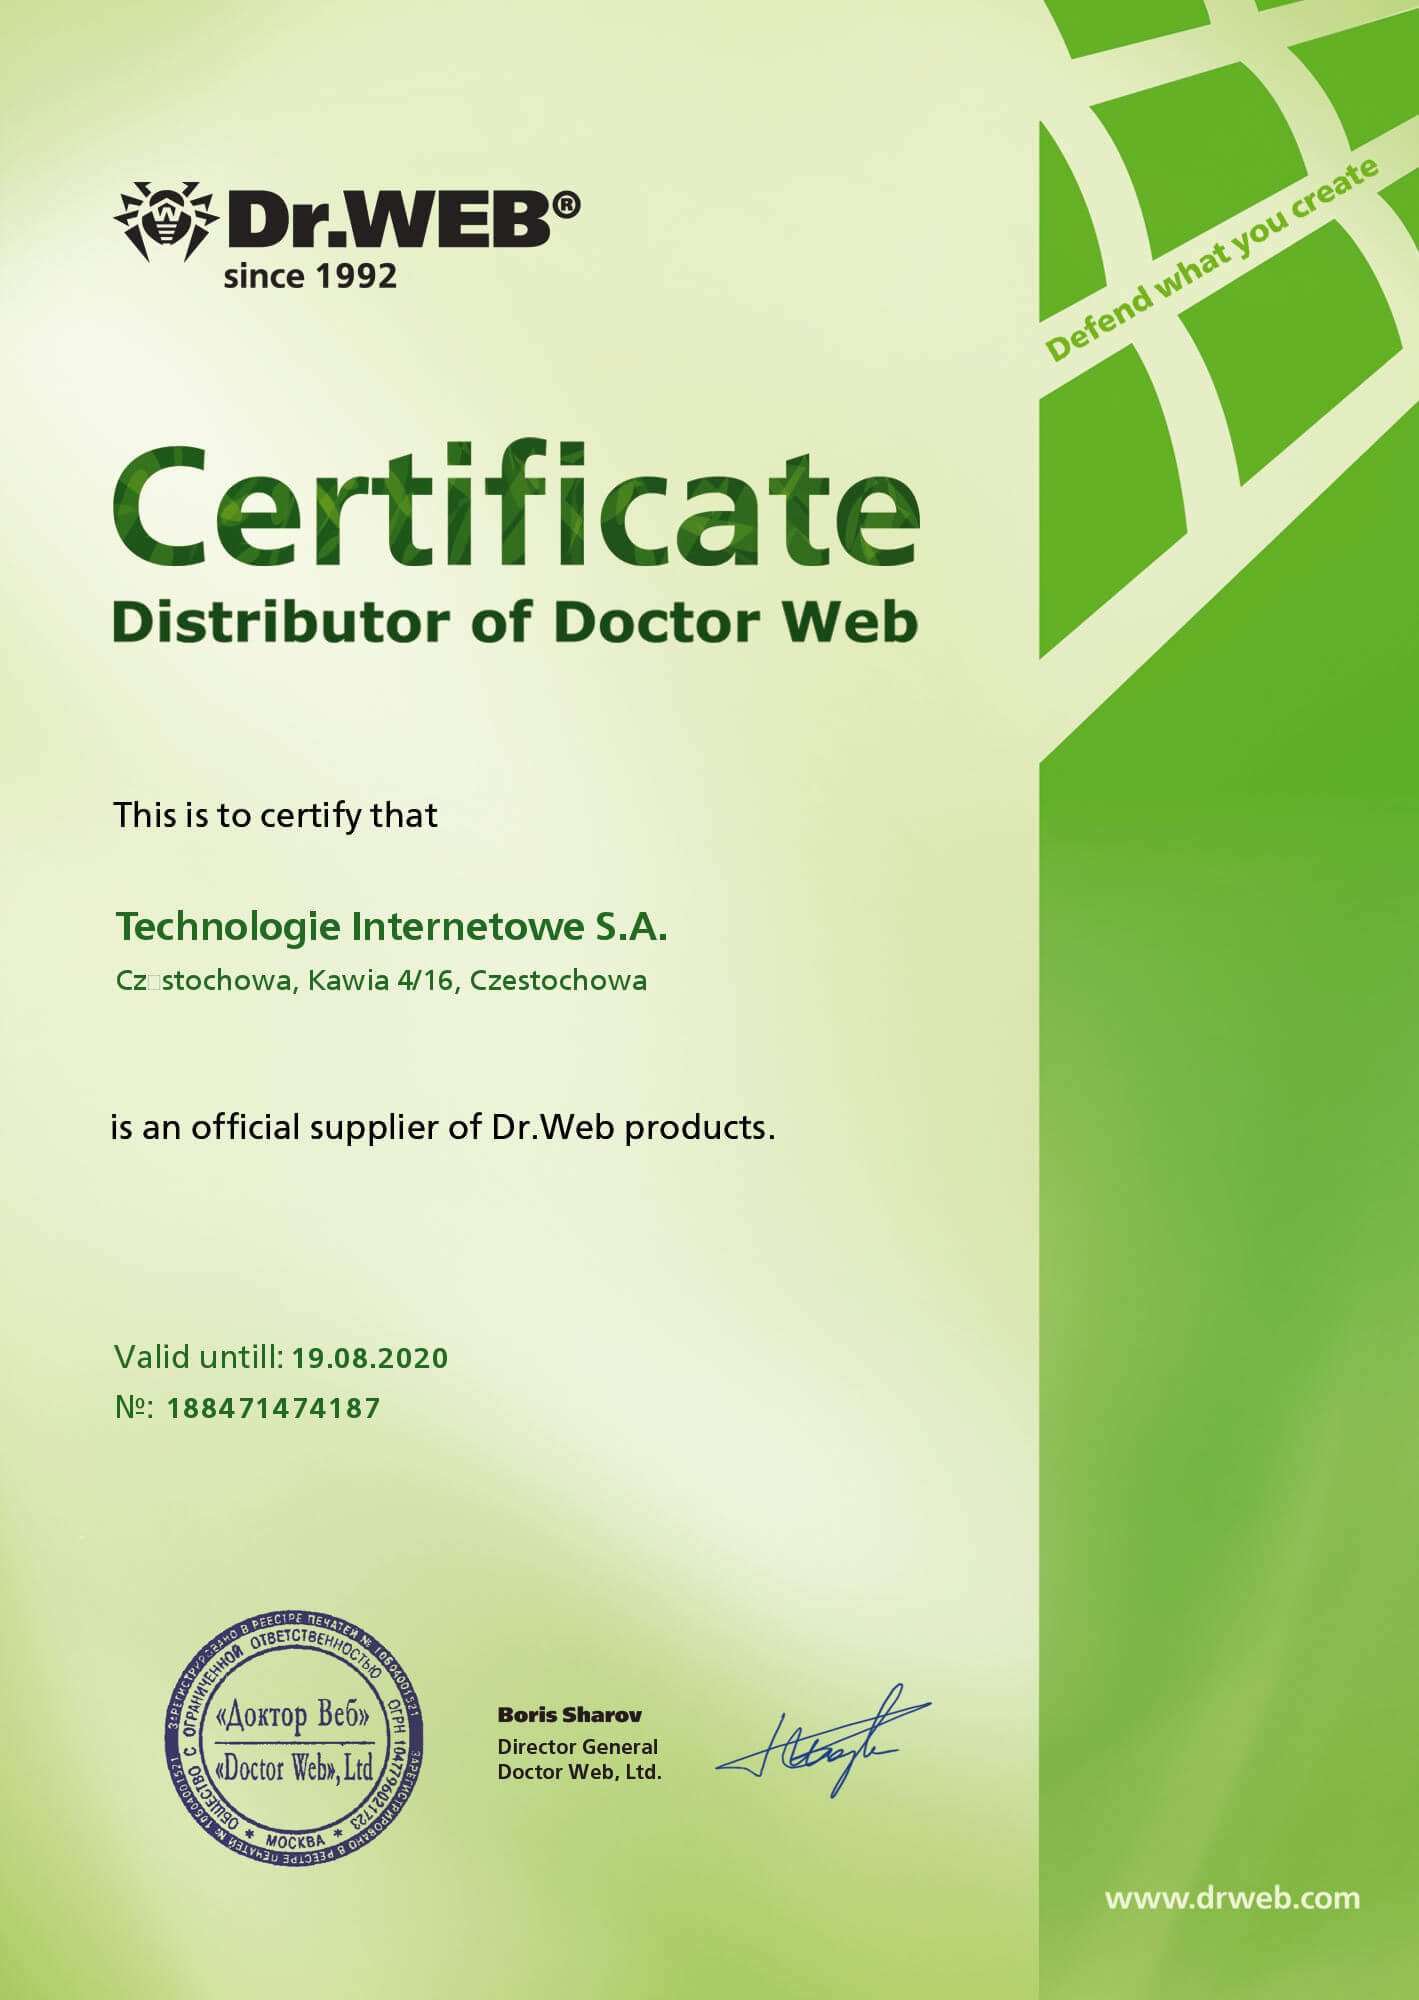 Dr.WEB - Official Supplier